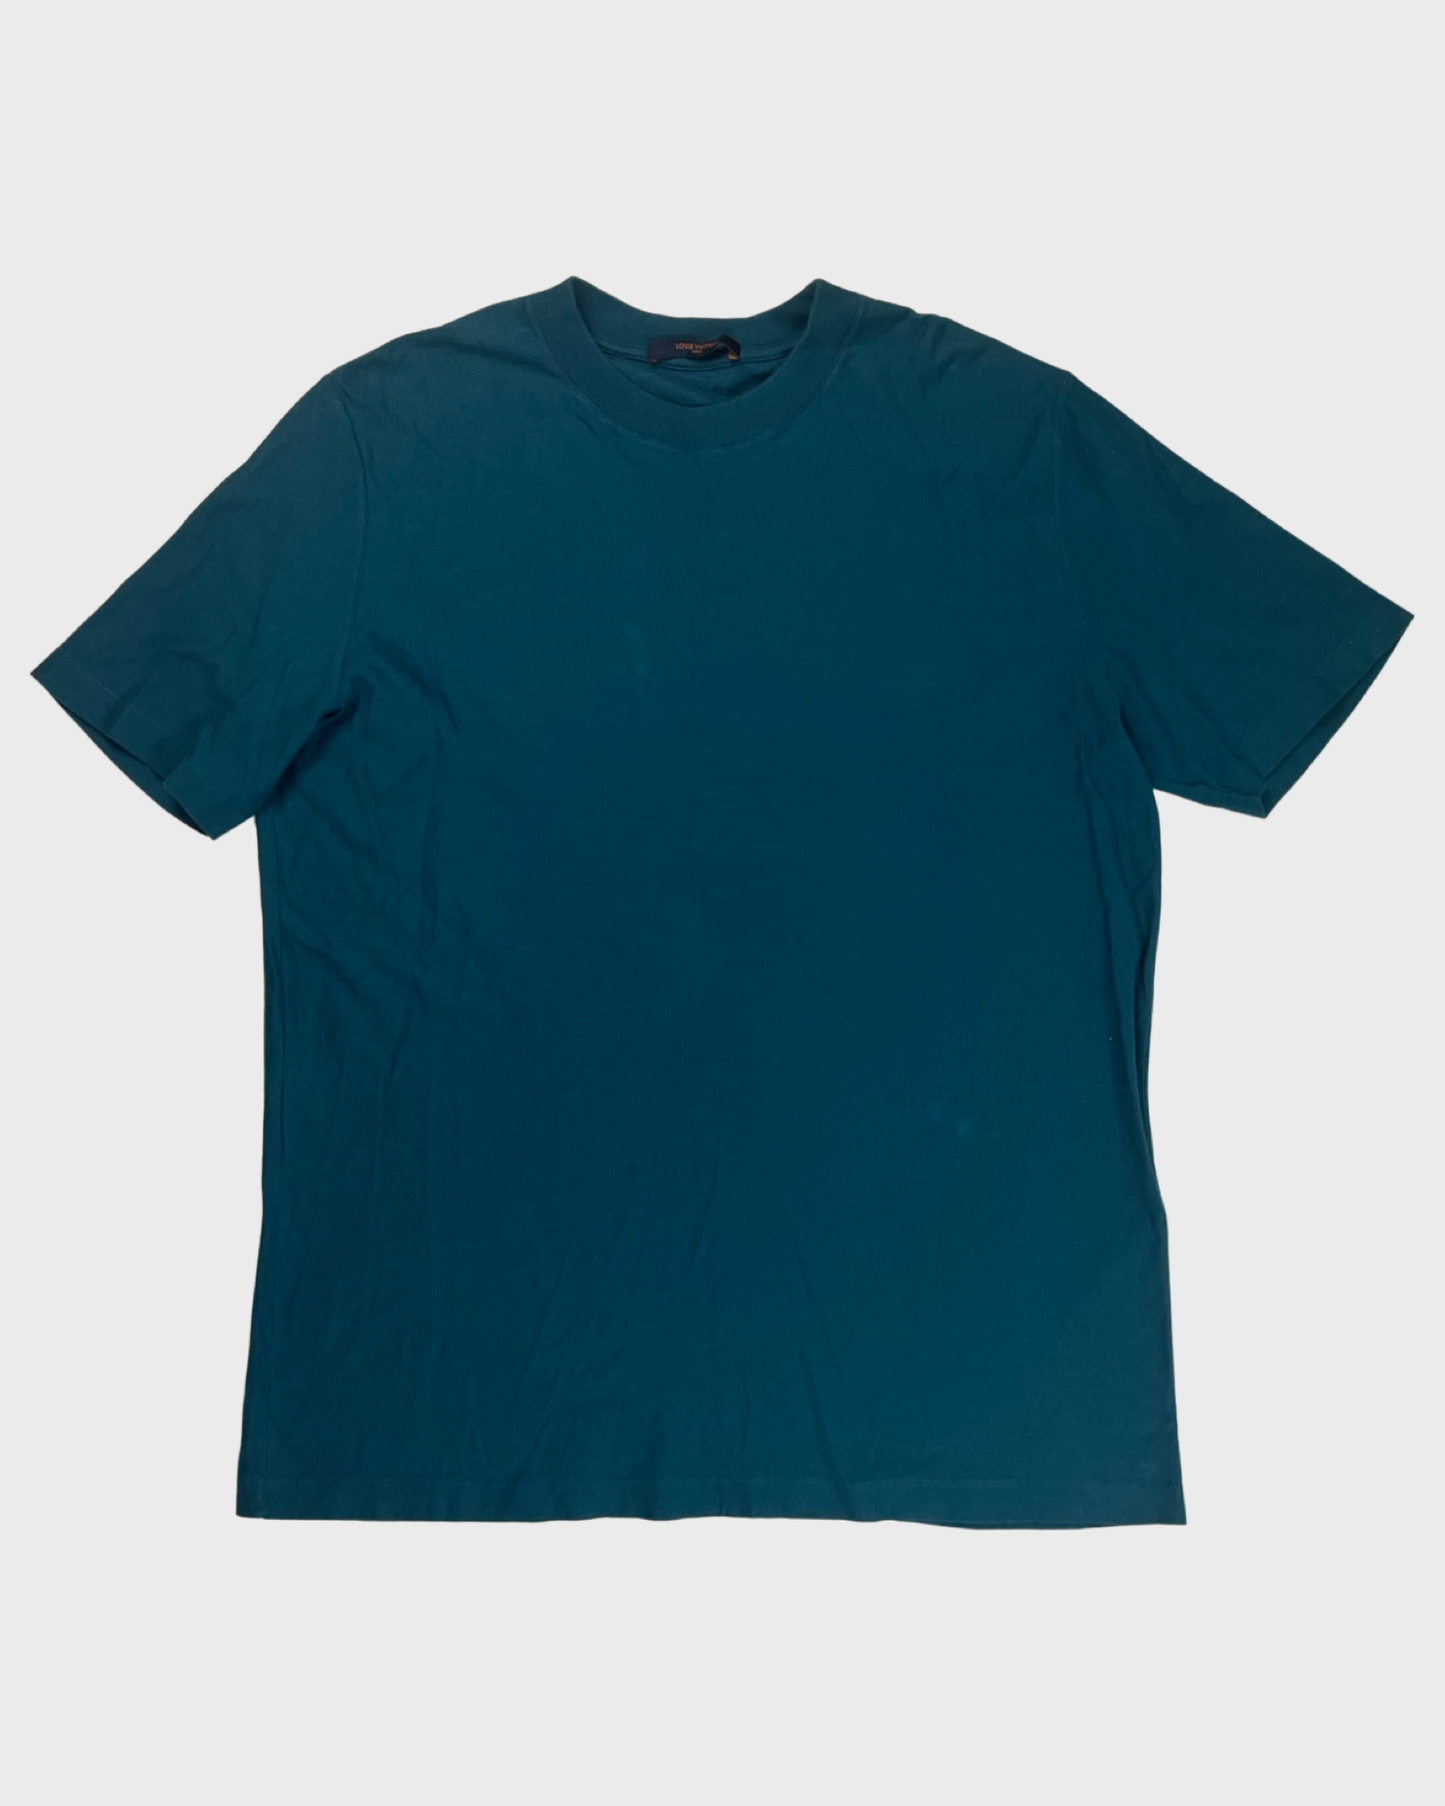 Louis Vuitton velour space logo teal green T-Shirt SZ:XXL